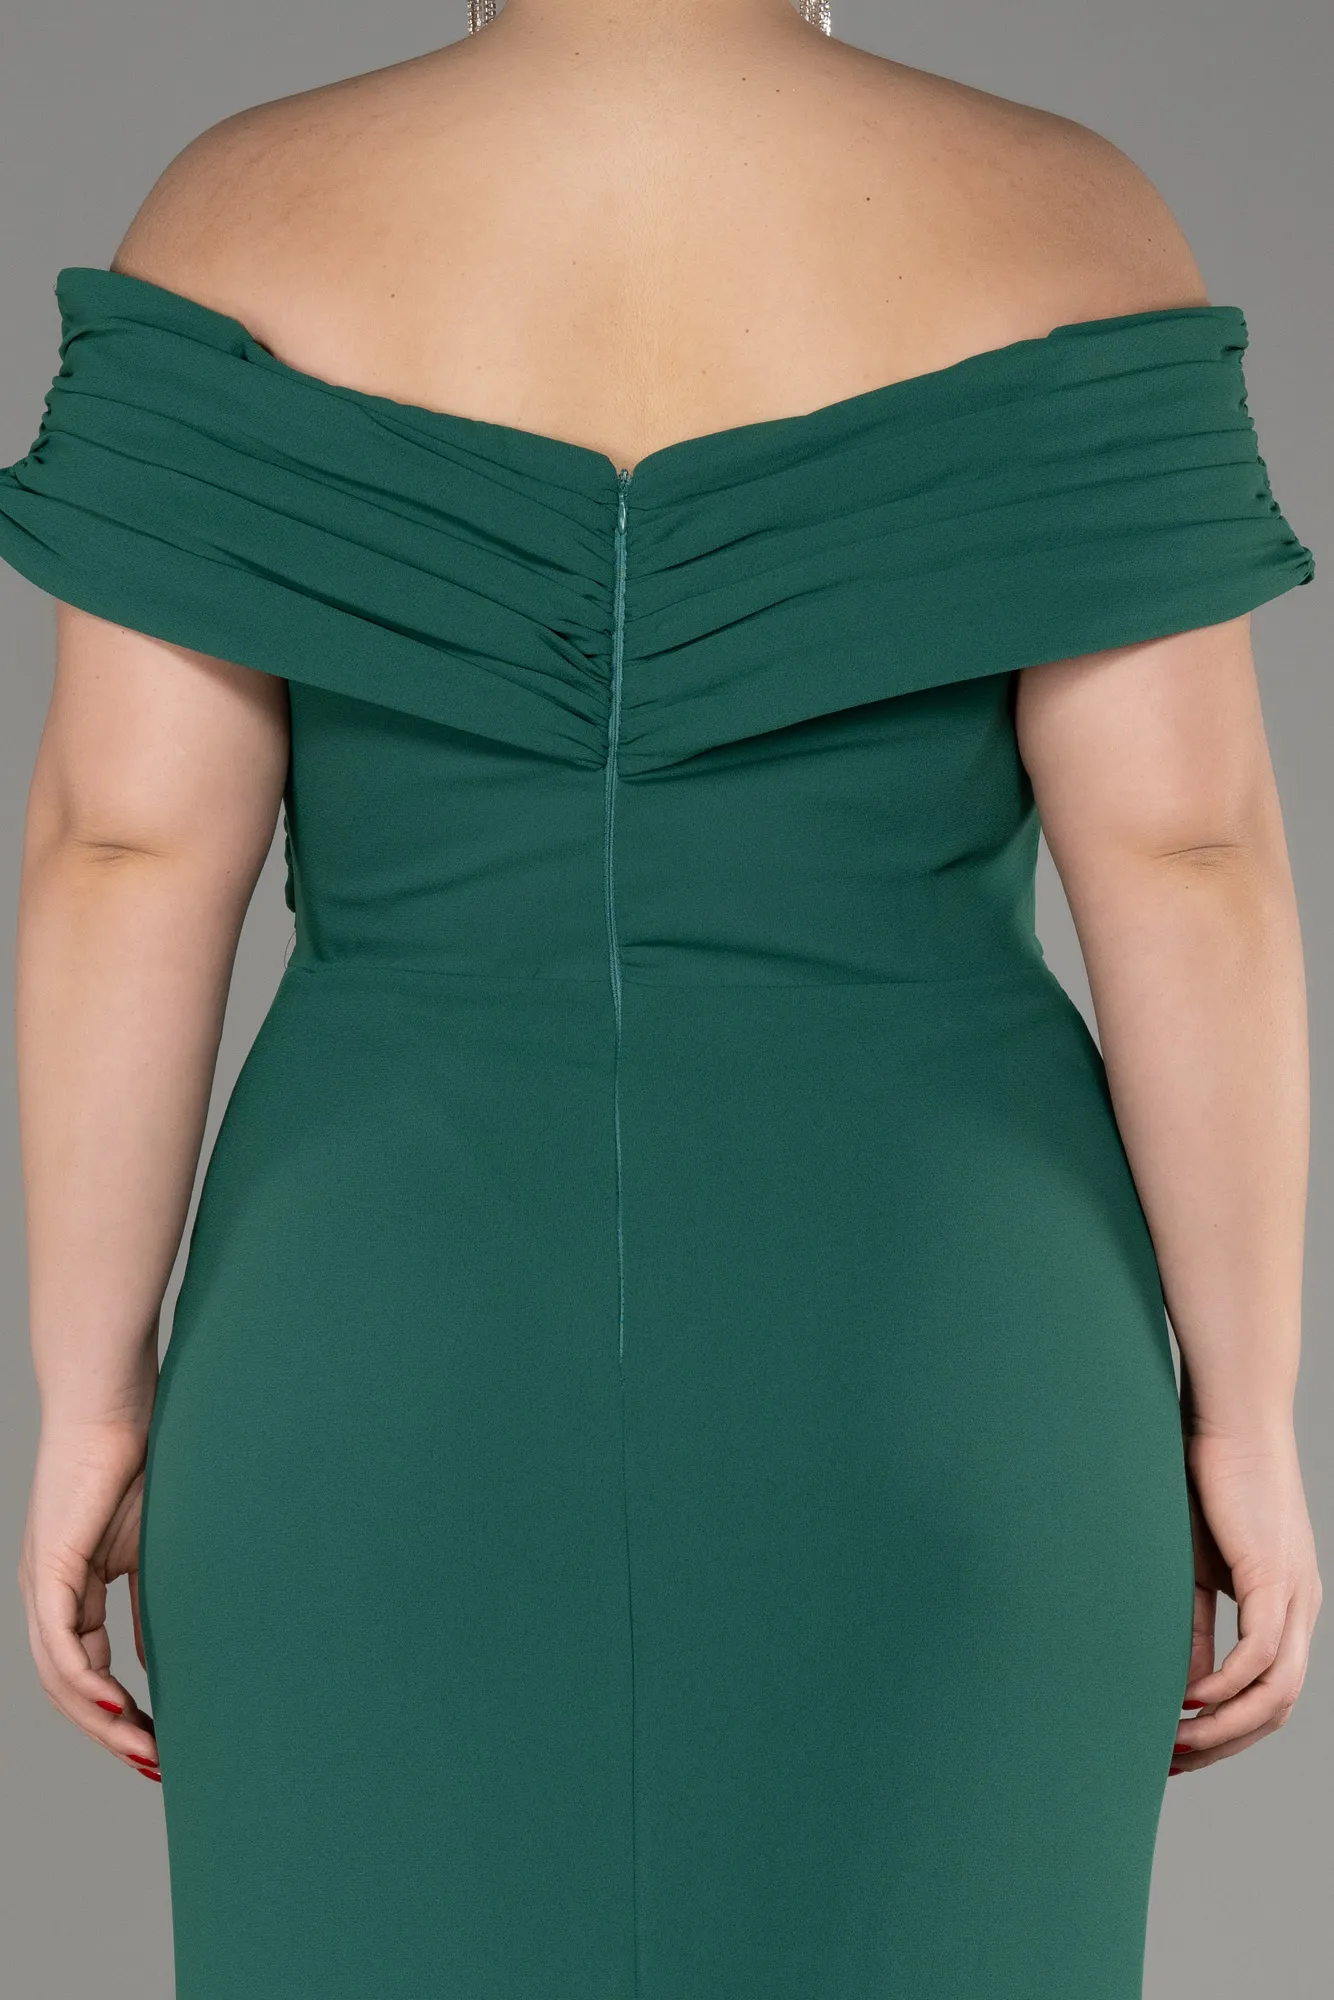 Emerald Green-Long Plus Size Evening Dress ABU3172